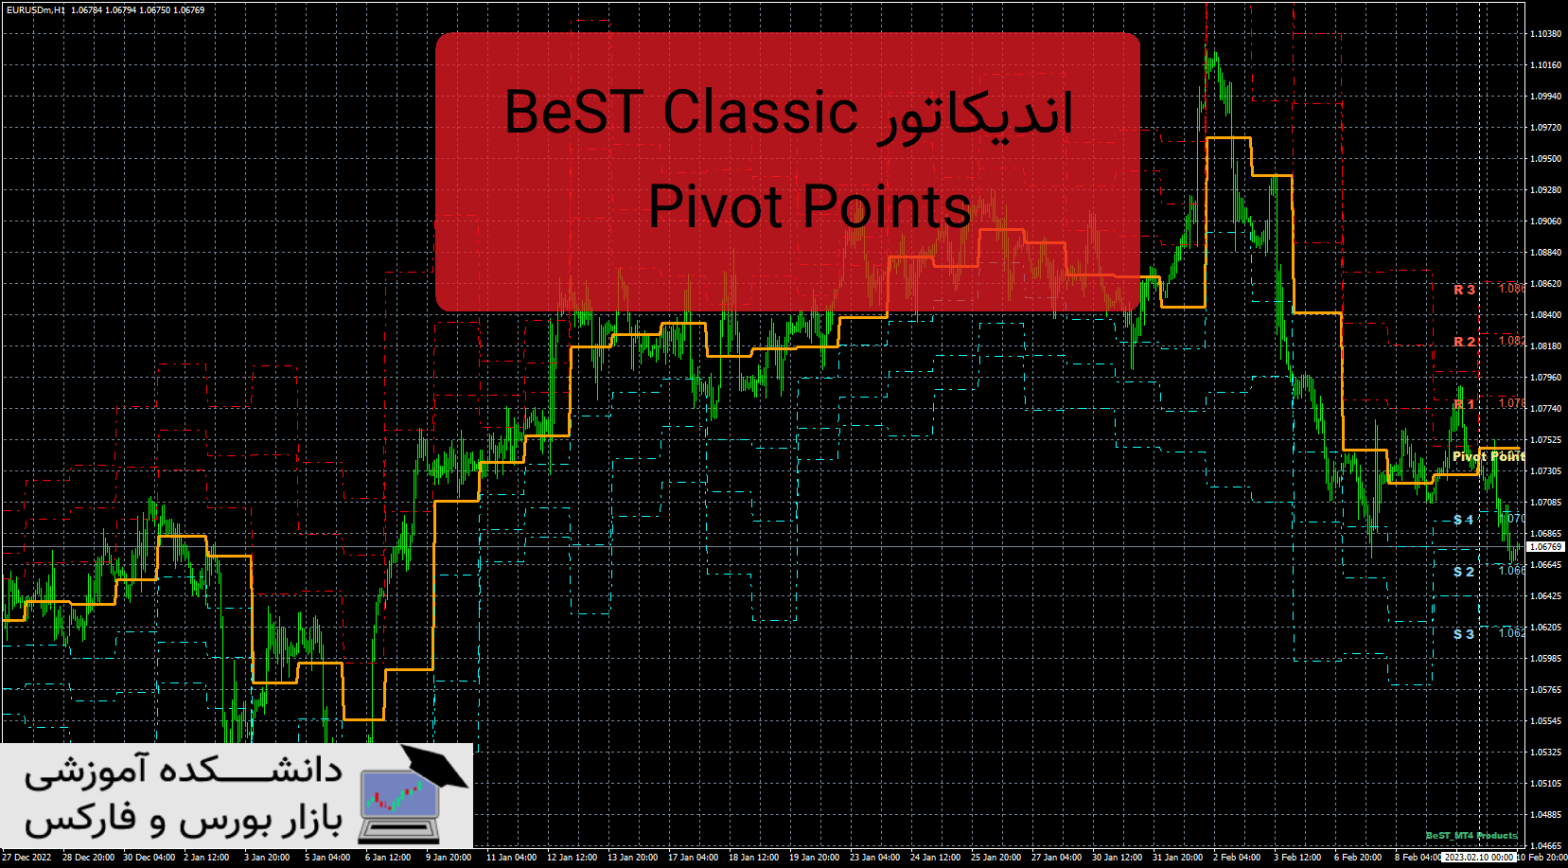 BeST Classic Pivot Points دانلود و معرفی اندیکاتور